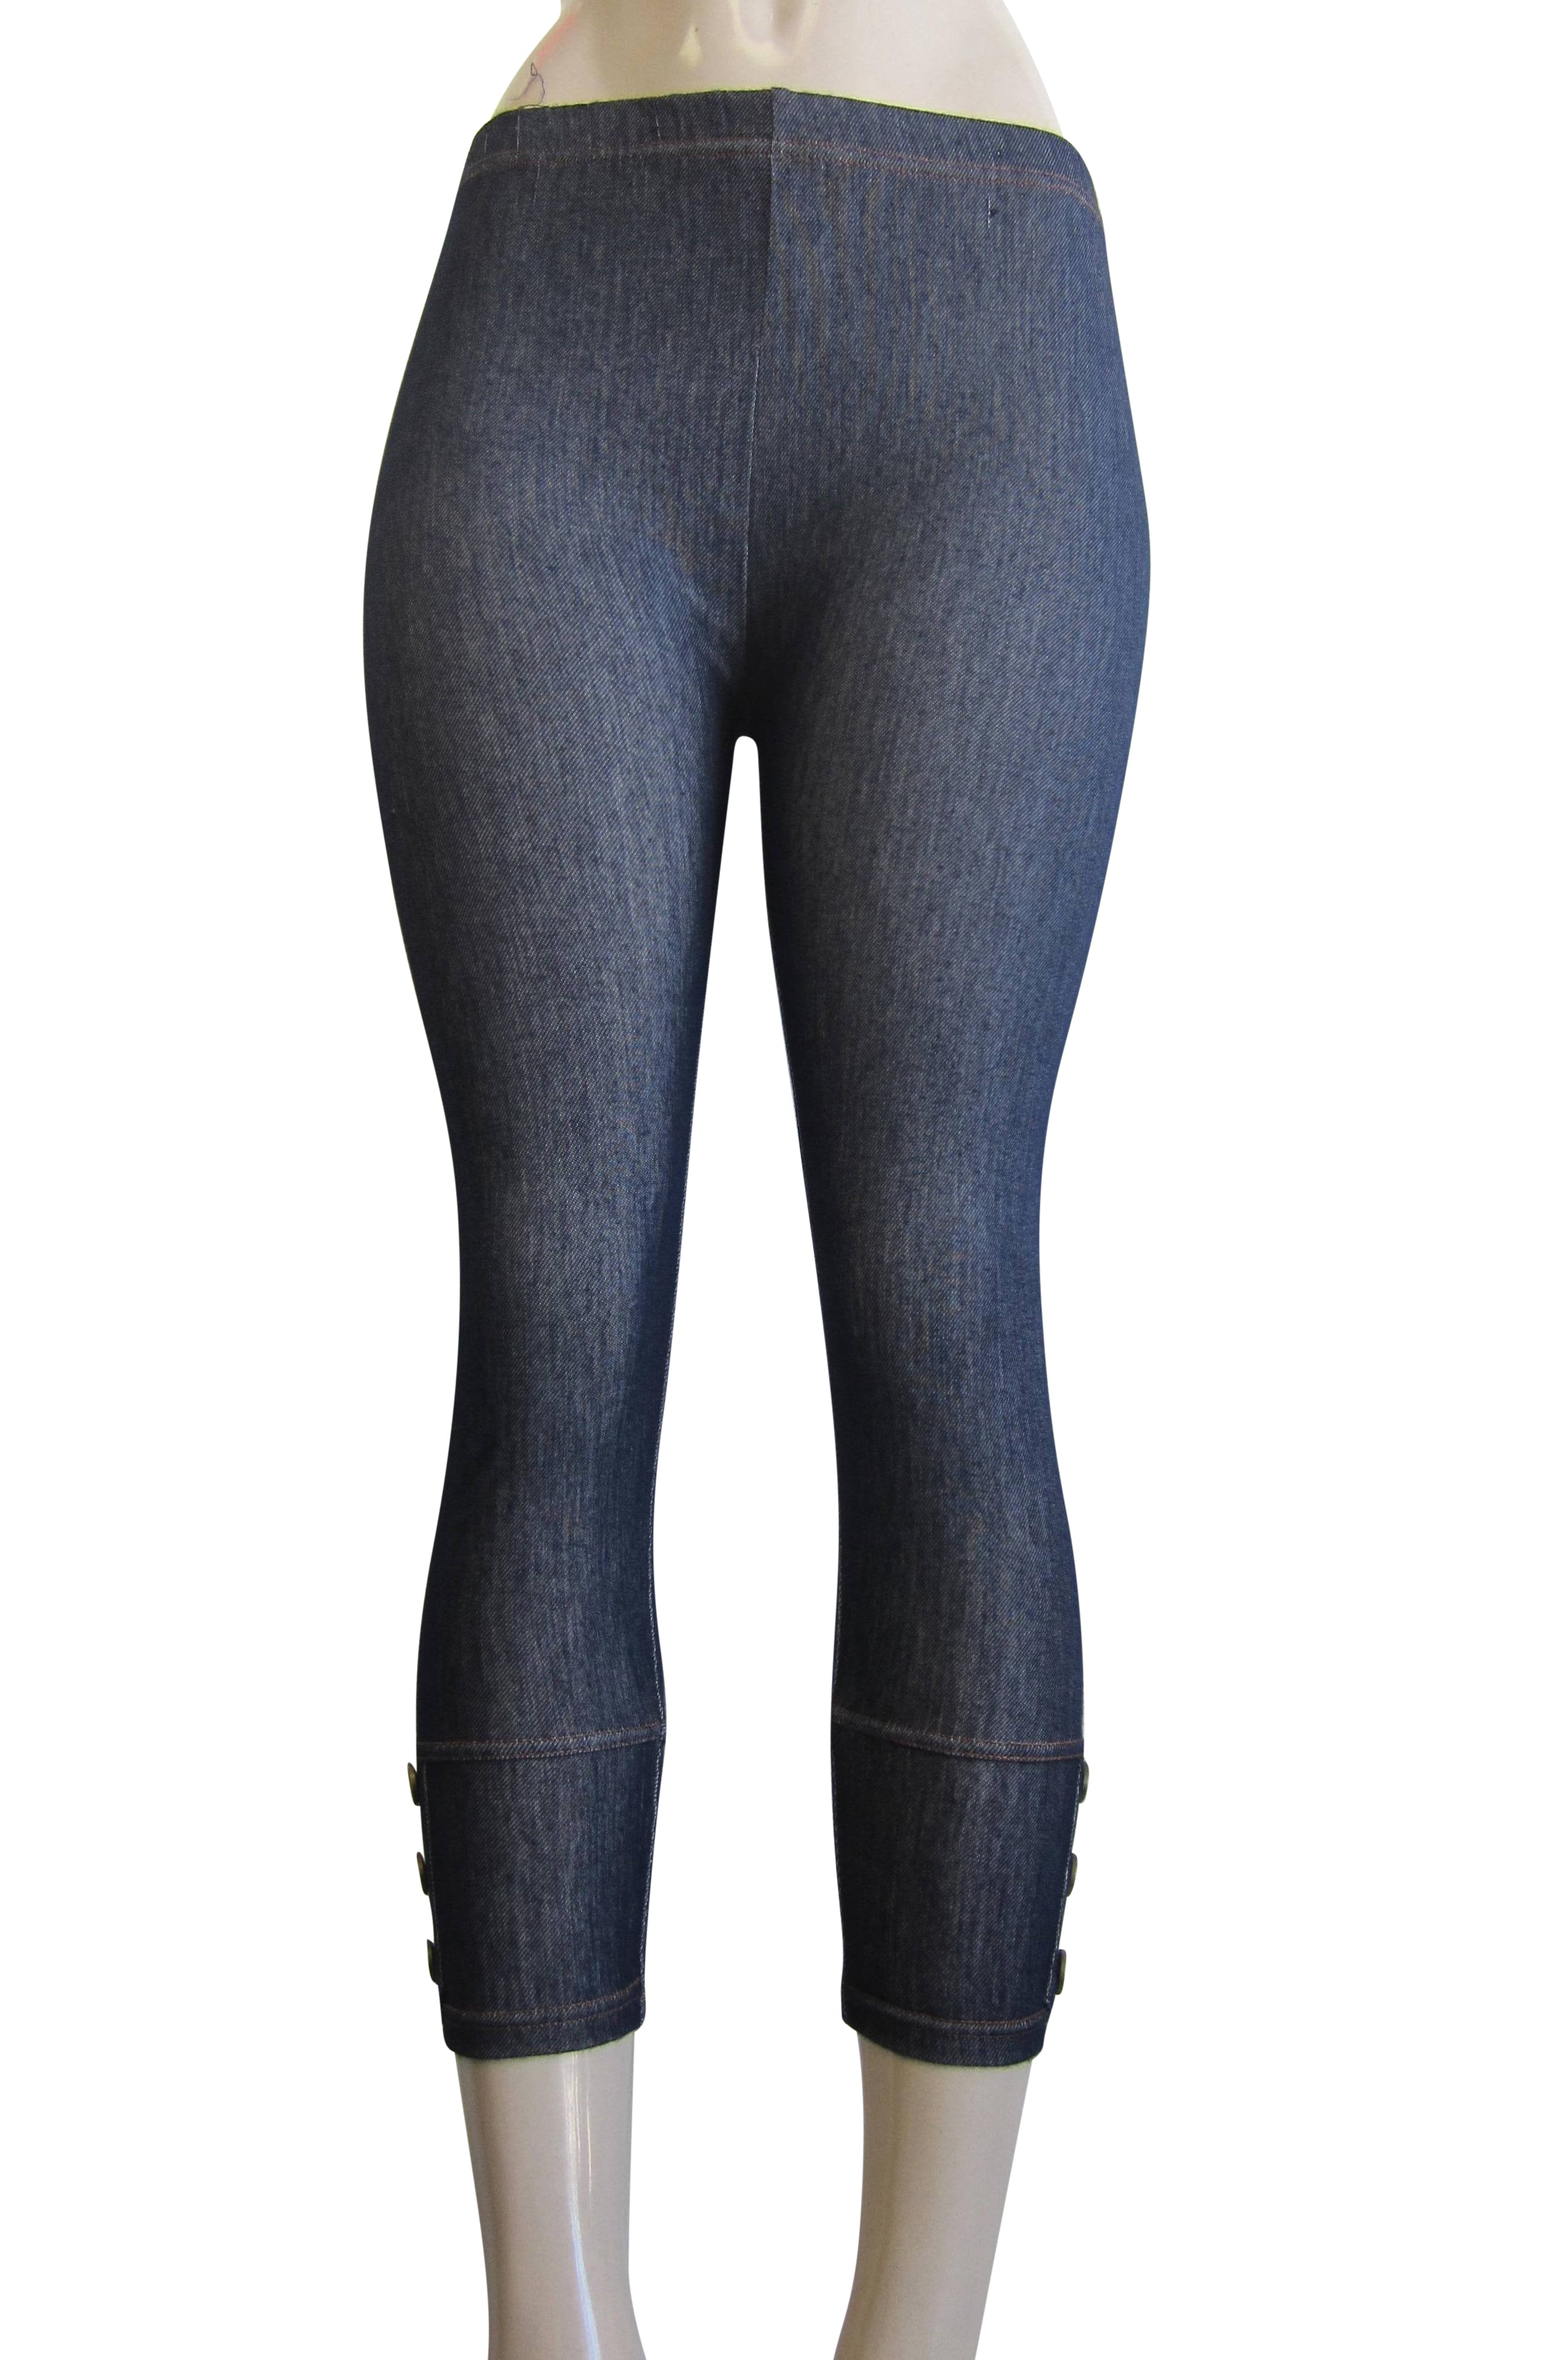 New Ladies Womens Stretchy Denim Look Skinny Jeggings Leggings Plus Size  6-30 UK | eBay